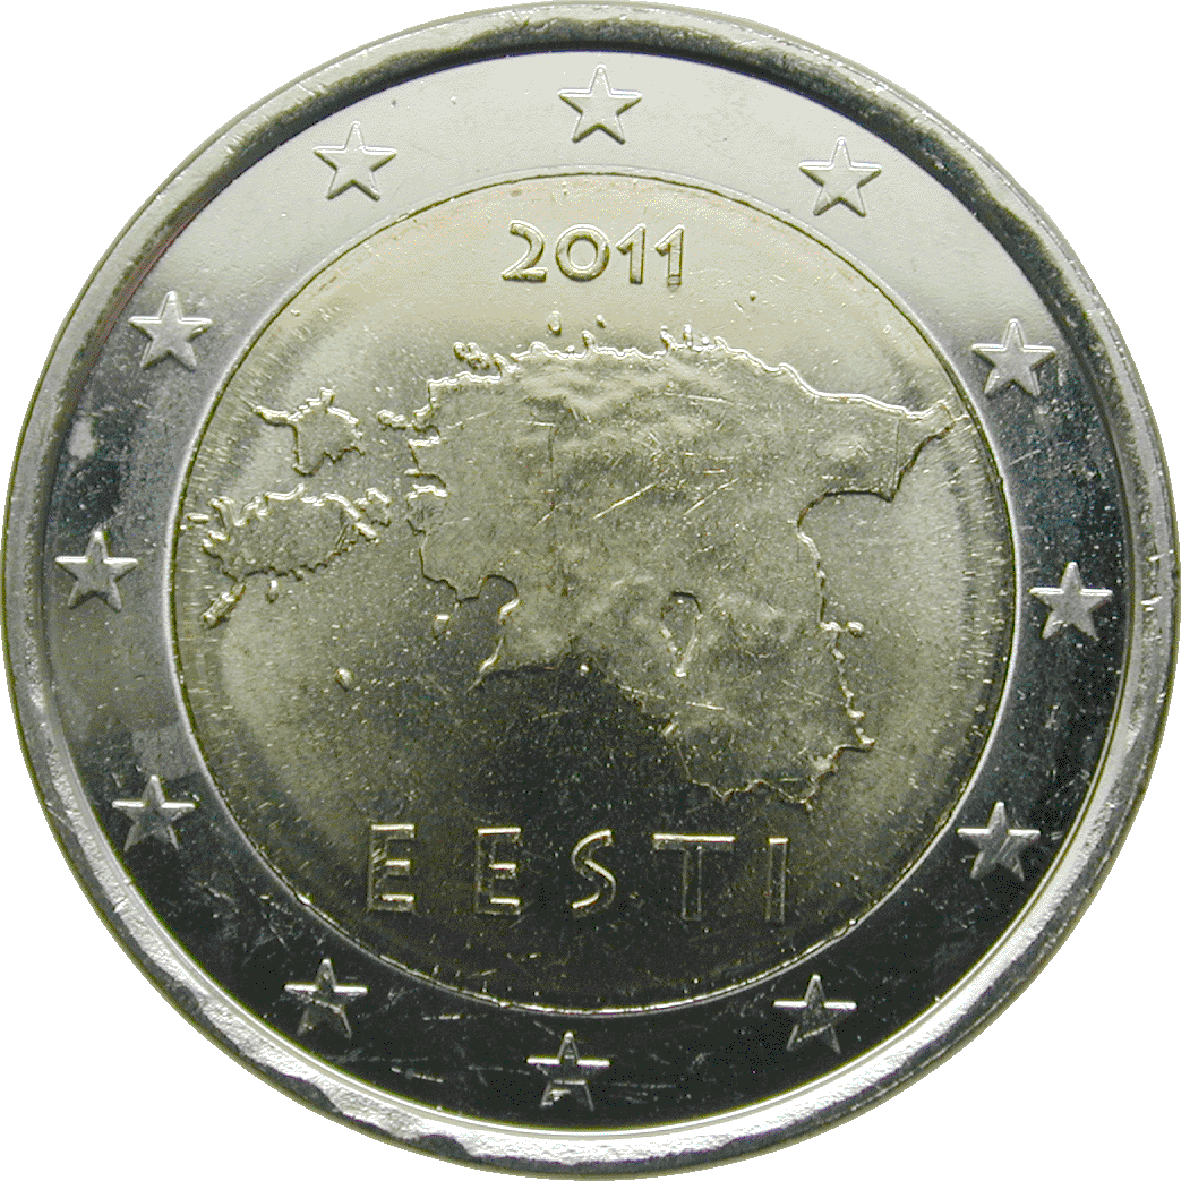 Republic of Estonia, 2 Euros 2011, Rahapaja (reverse)